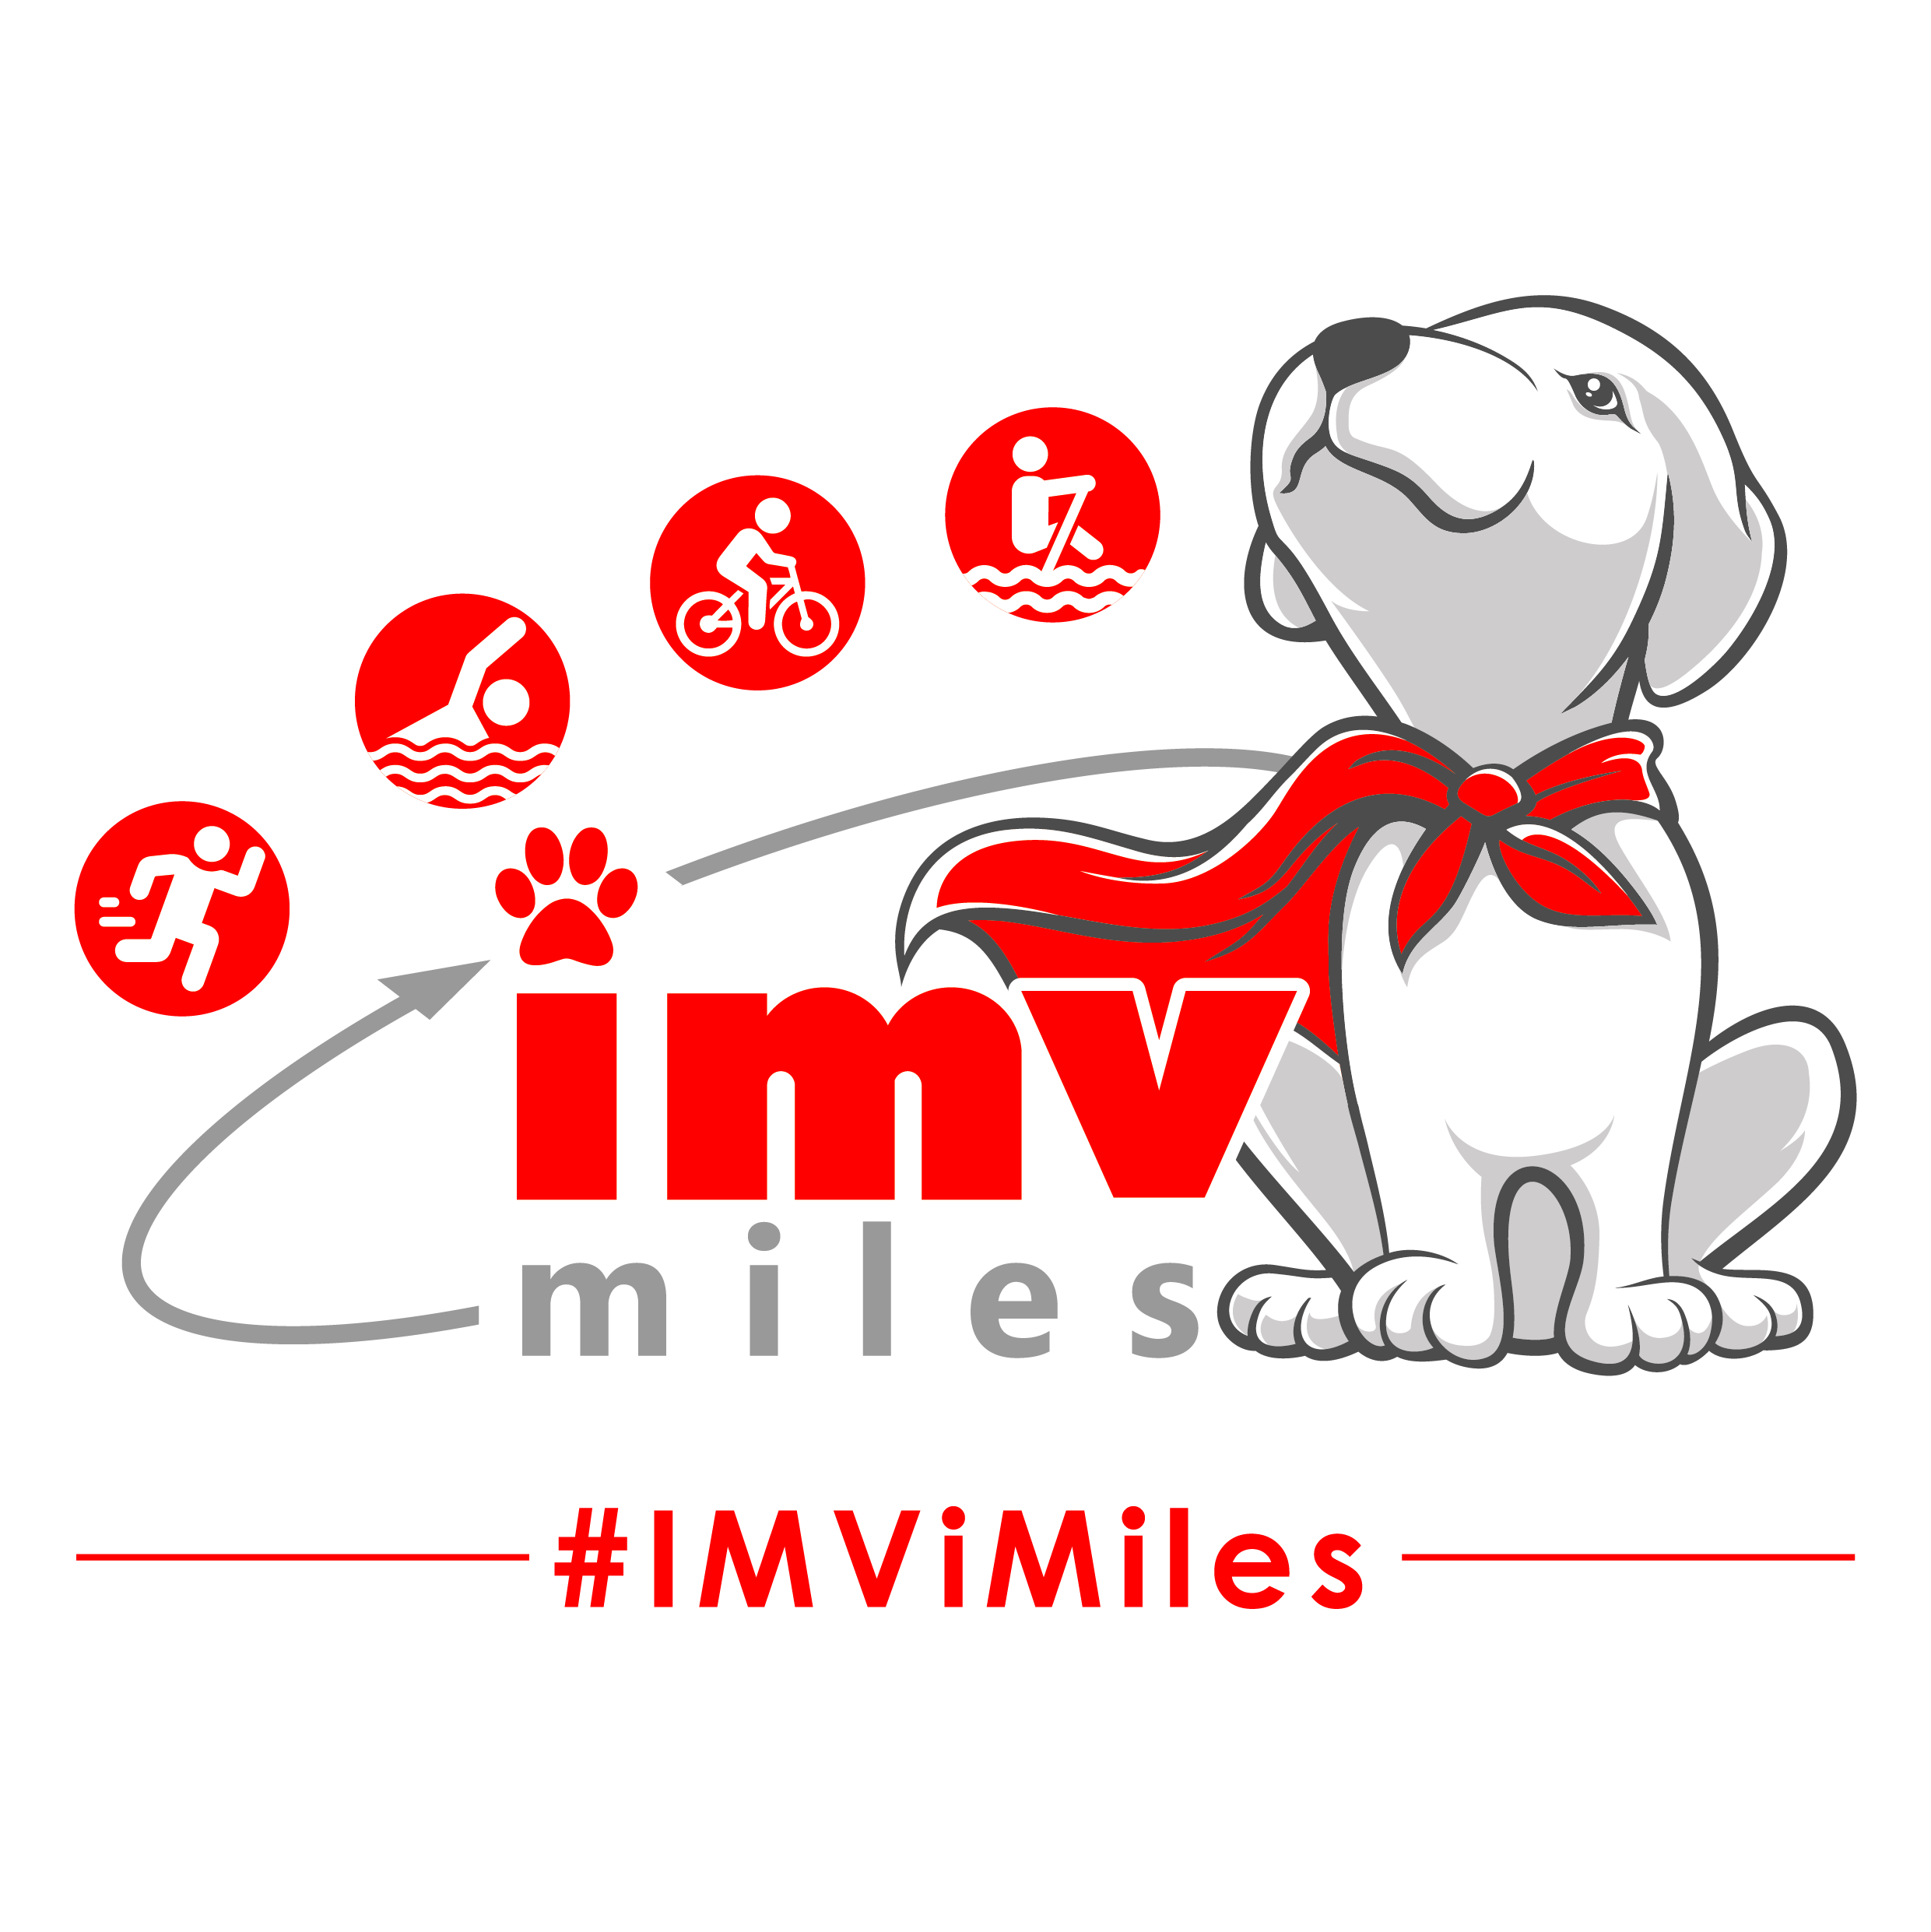 imv miles dog - full colour with clear bg